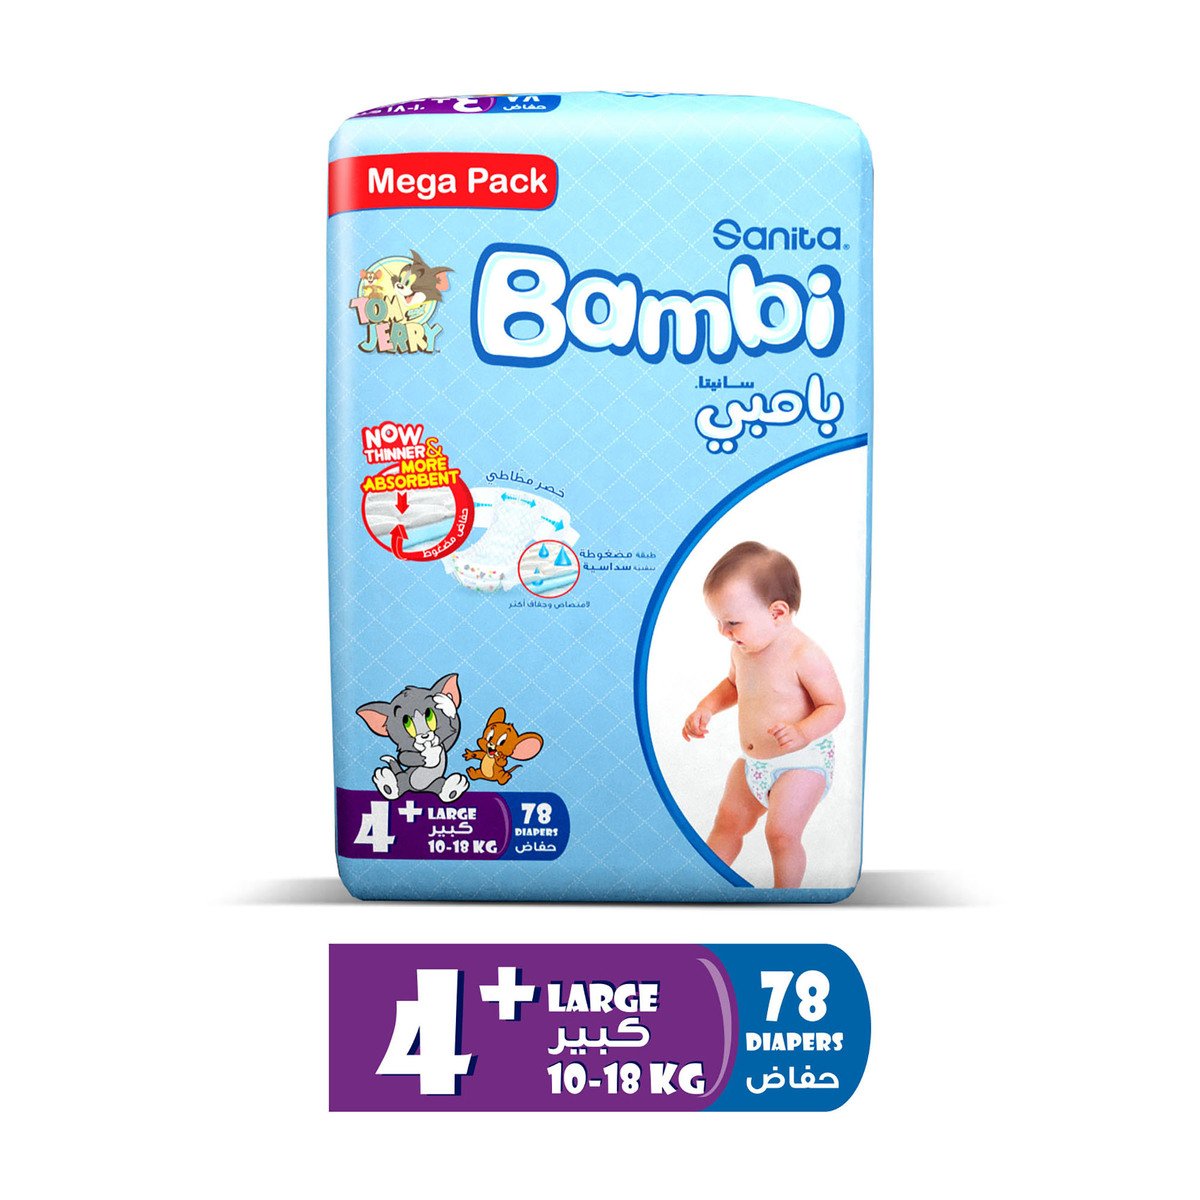 Sanita Bambi Baby Diaper Mega Pack Size 4+ Large plus 10-18kg 78pcs